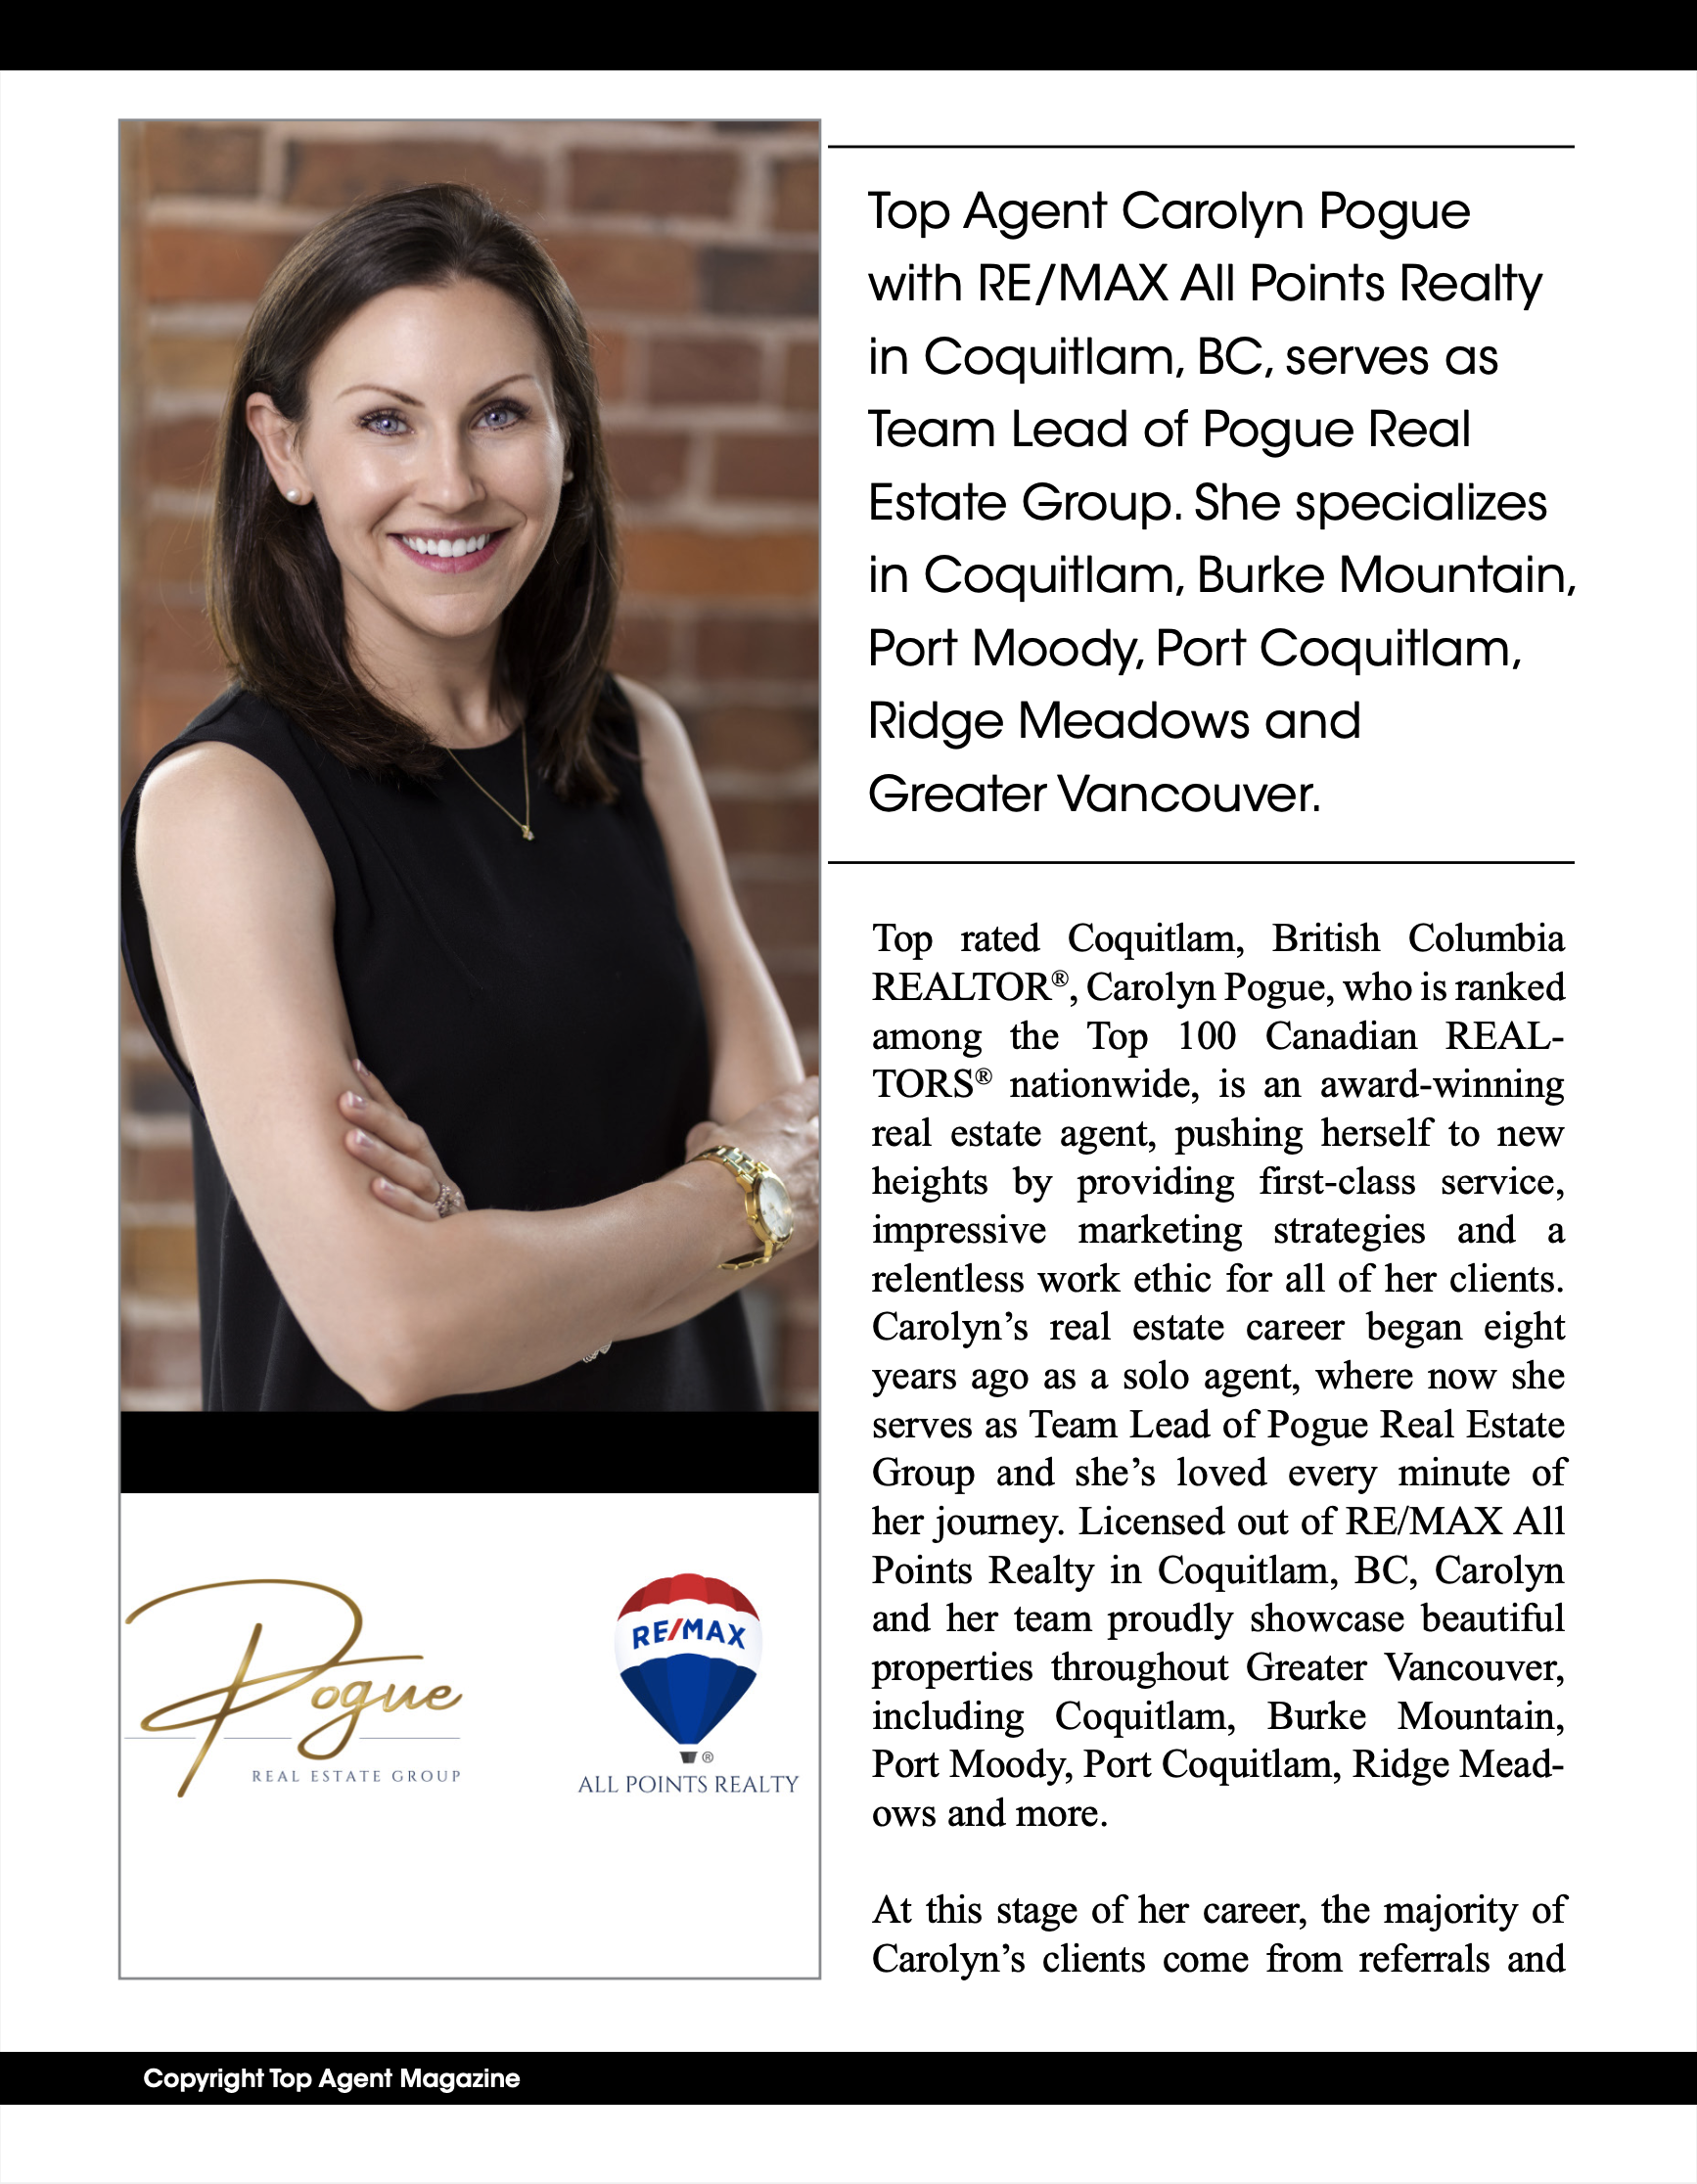 Carolyn-Pogue-Top-Agent-Magazine-Canada-Coquitlam-Realtor-Burke-Mountain-Real-Estate-2.png